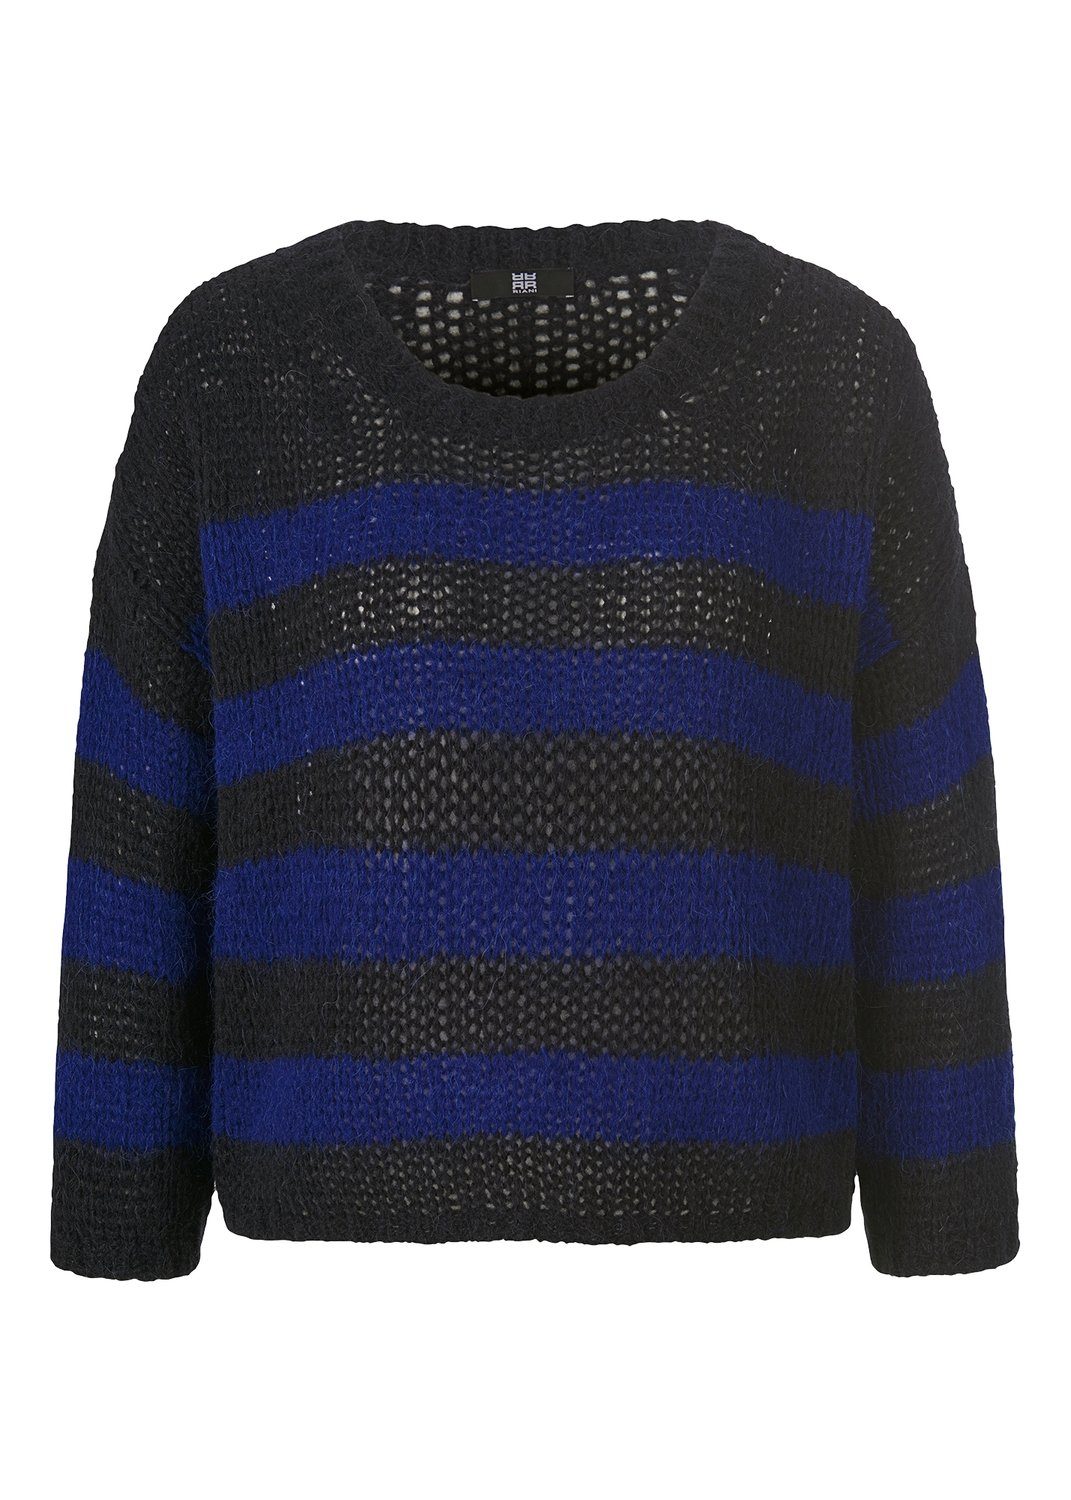 Riani Sweatshirt Pullover, black patterned